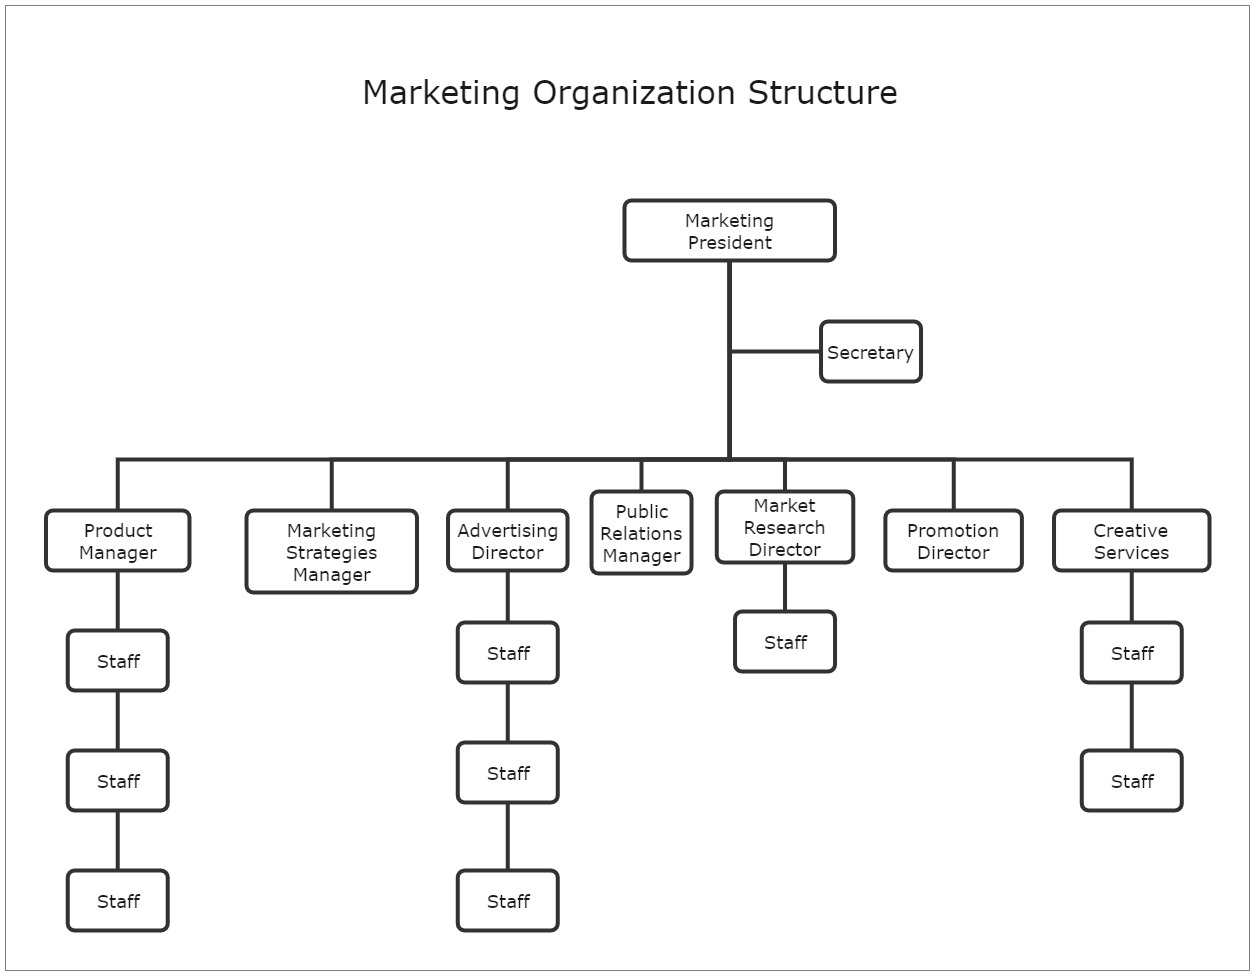 Marketing Organization Structure Template